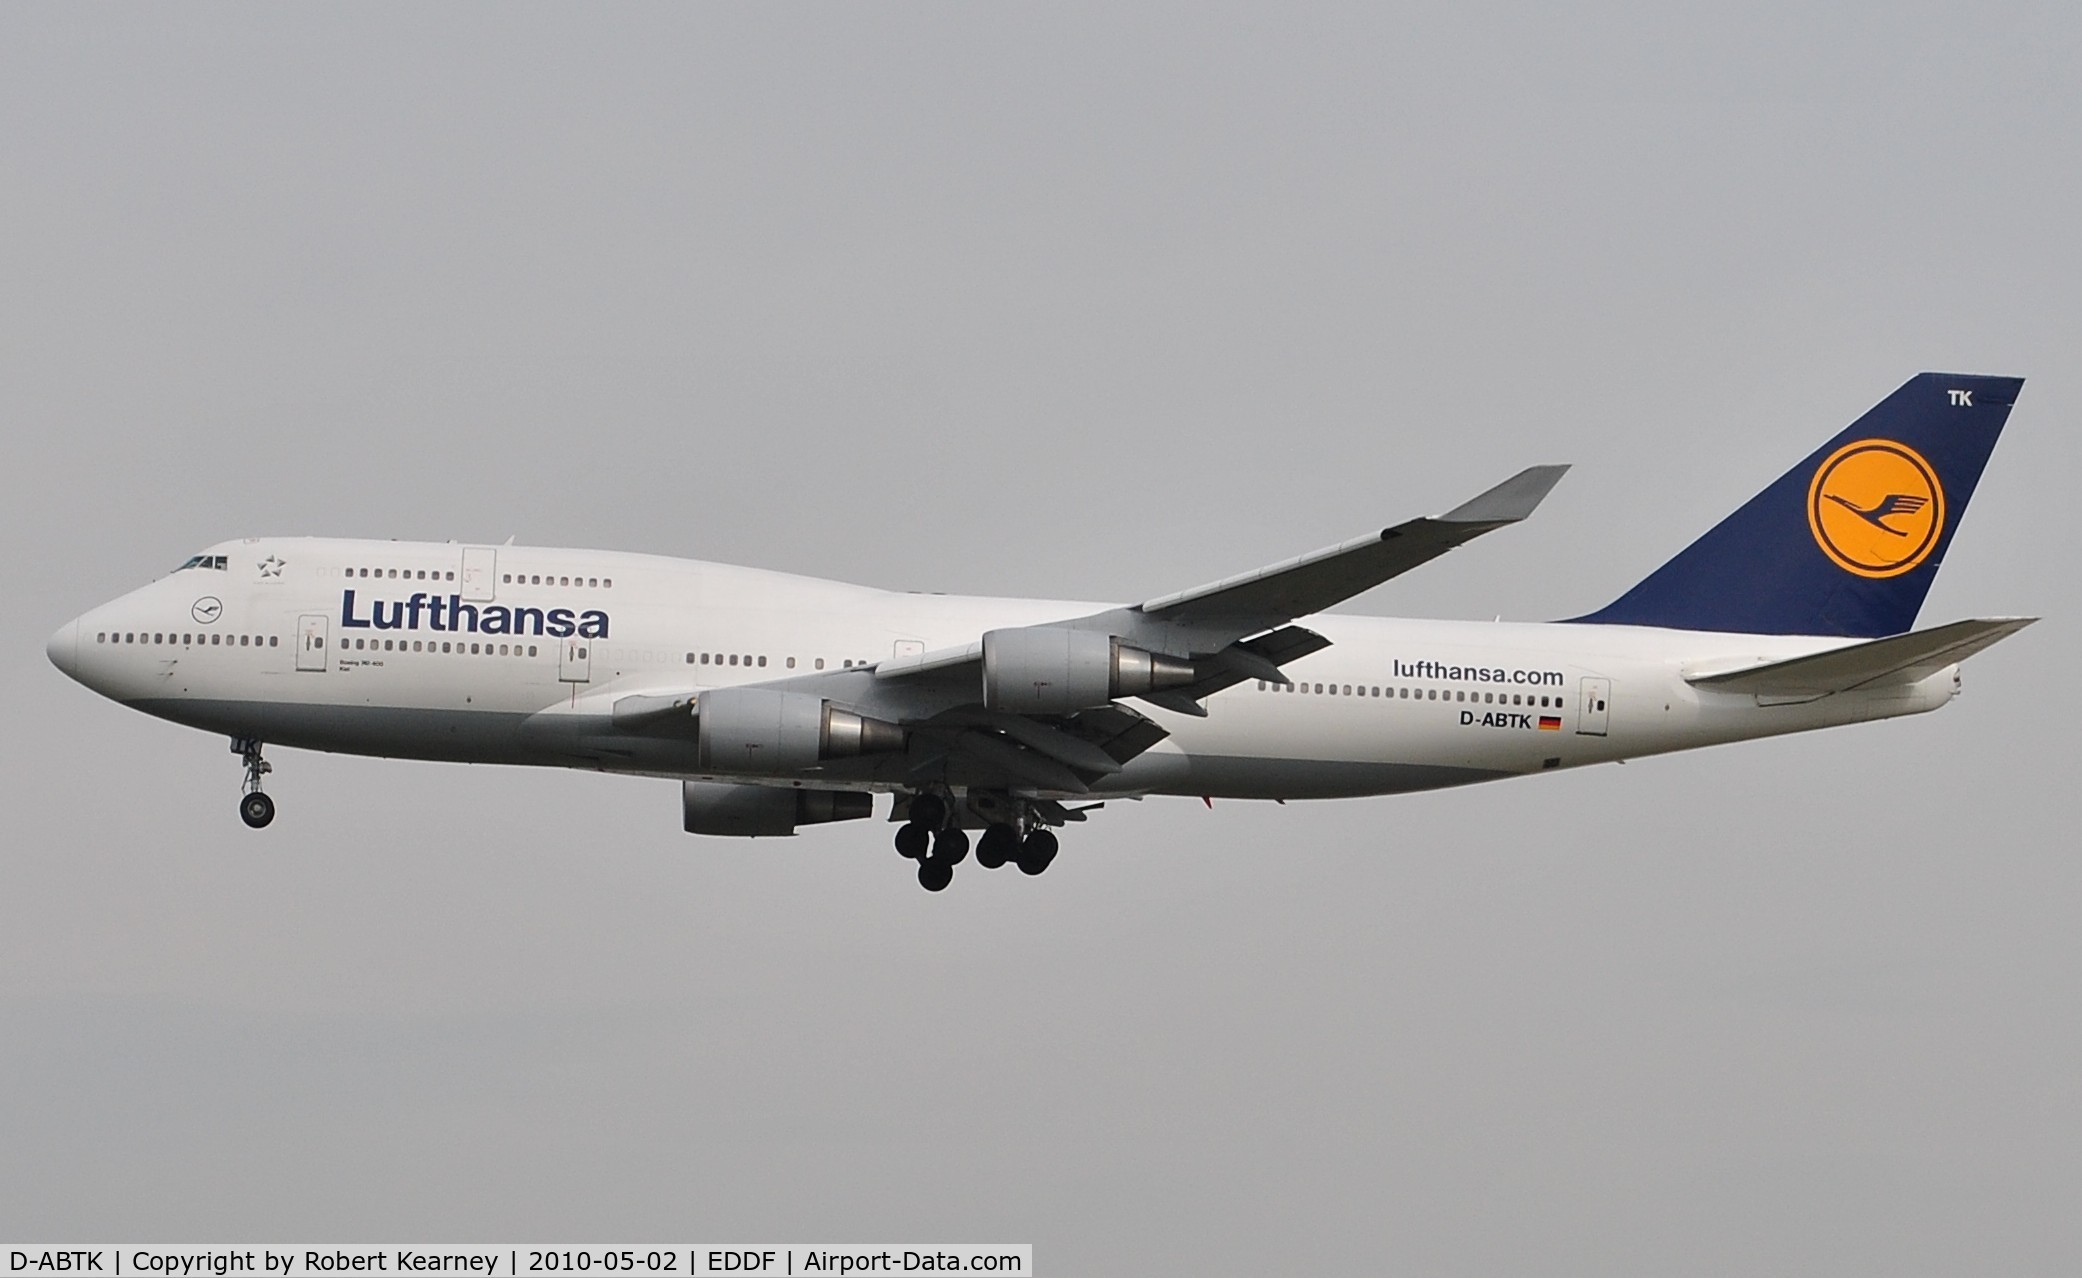 D-ABTK, 2001 Boeing 747-430 C/N 29871, Lufthansa coming home